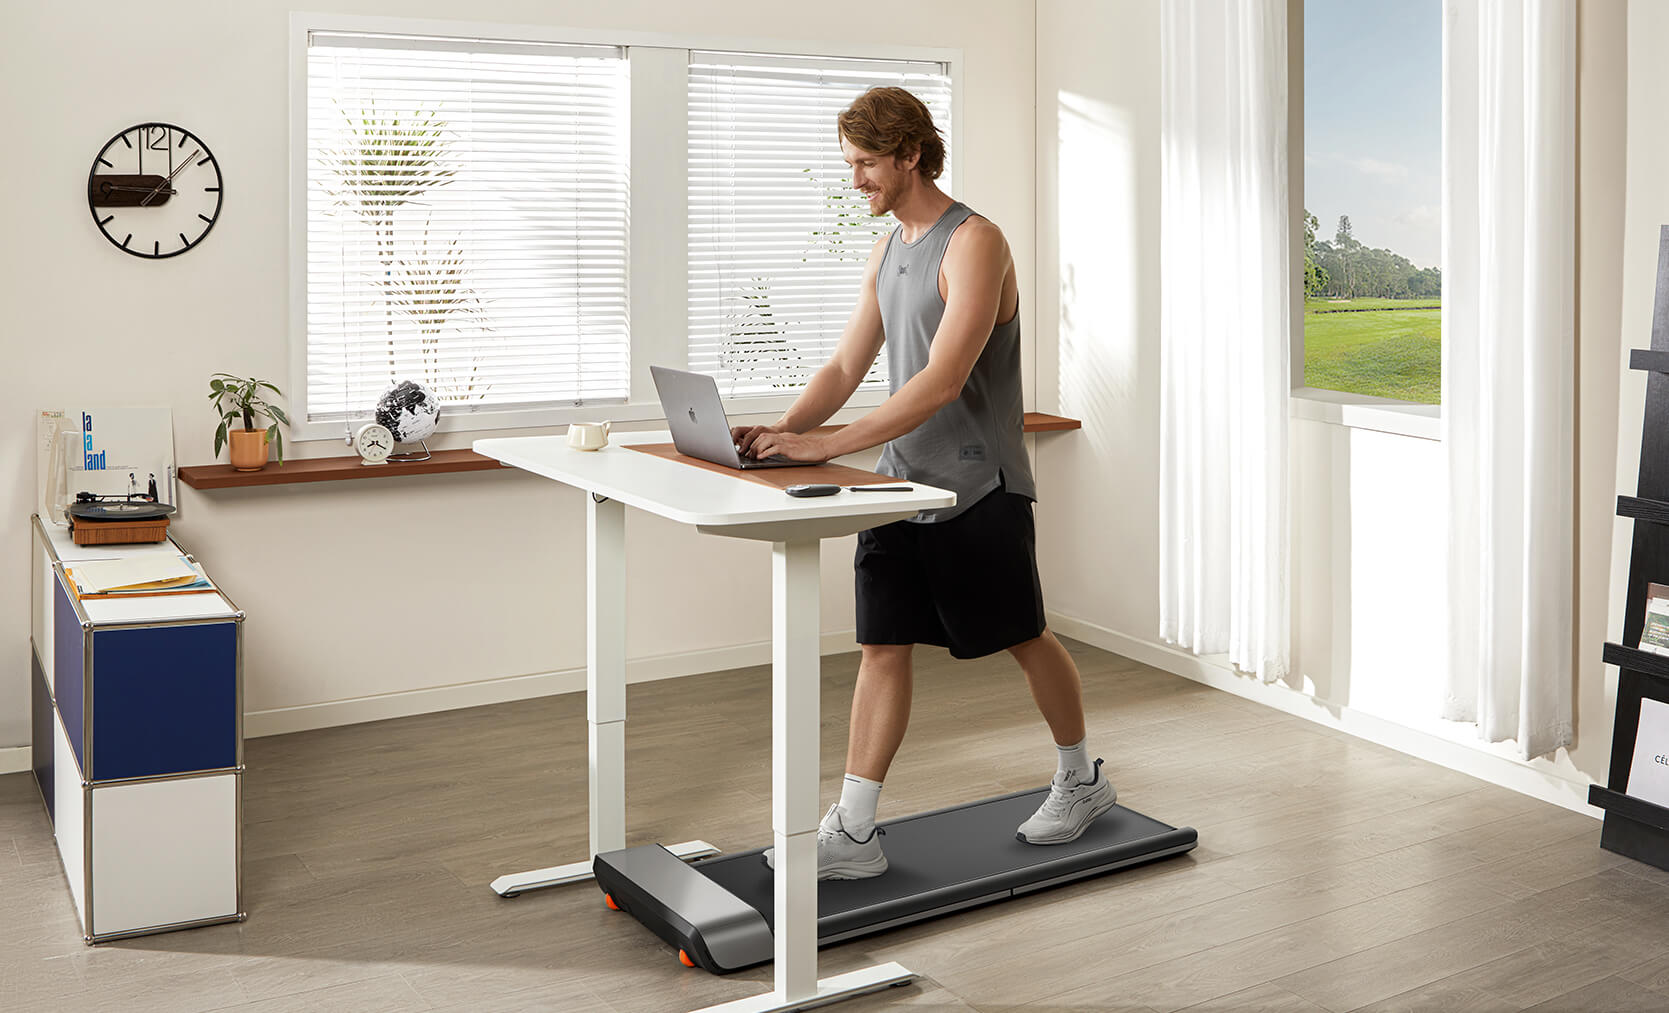 Kingsmith WalkingPad P1 Under Desk Treadmill, so you can walk and work